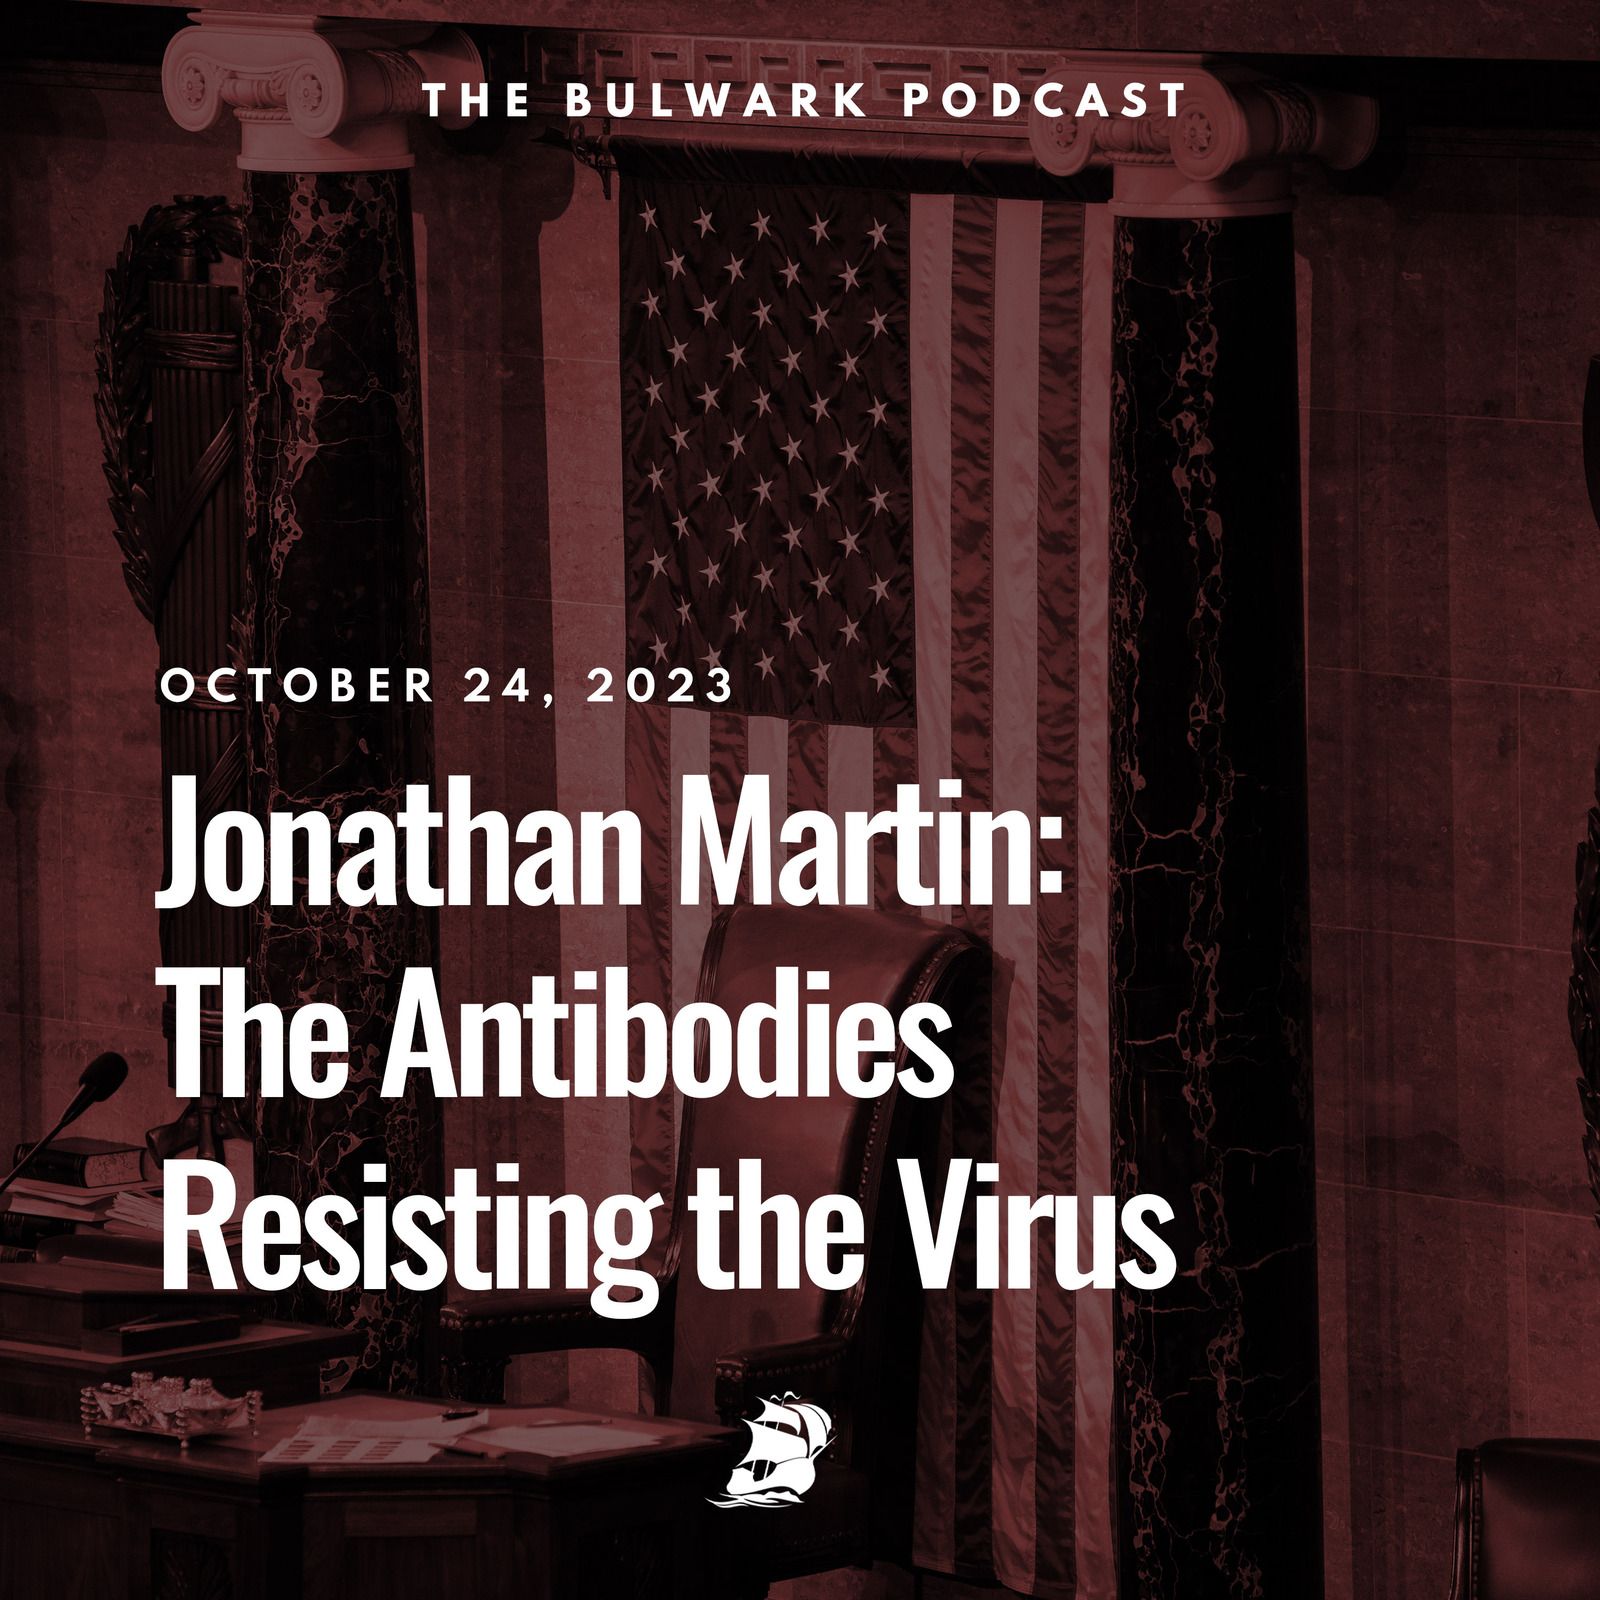 Jonathan Martin: The Antibodies Resisting the Virus by The Bulwark Podcast